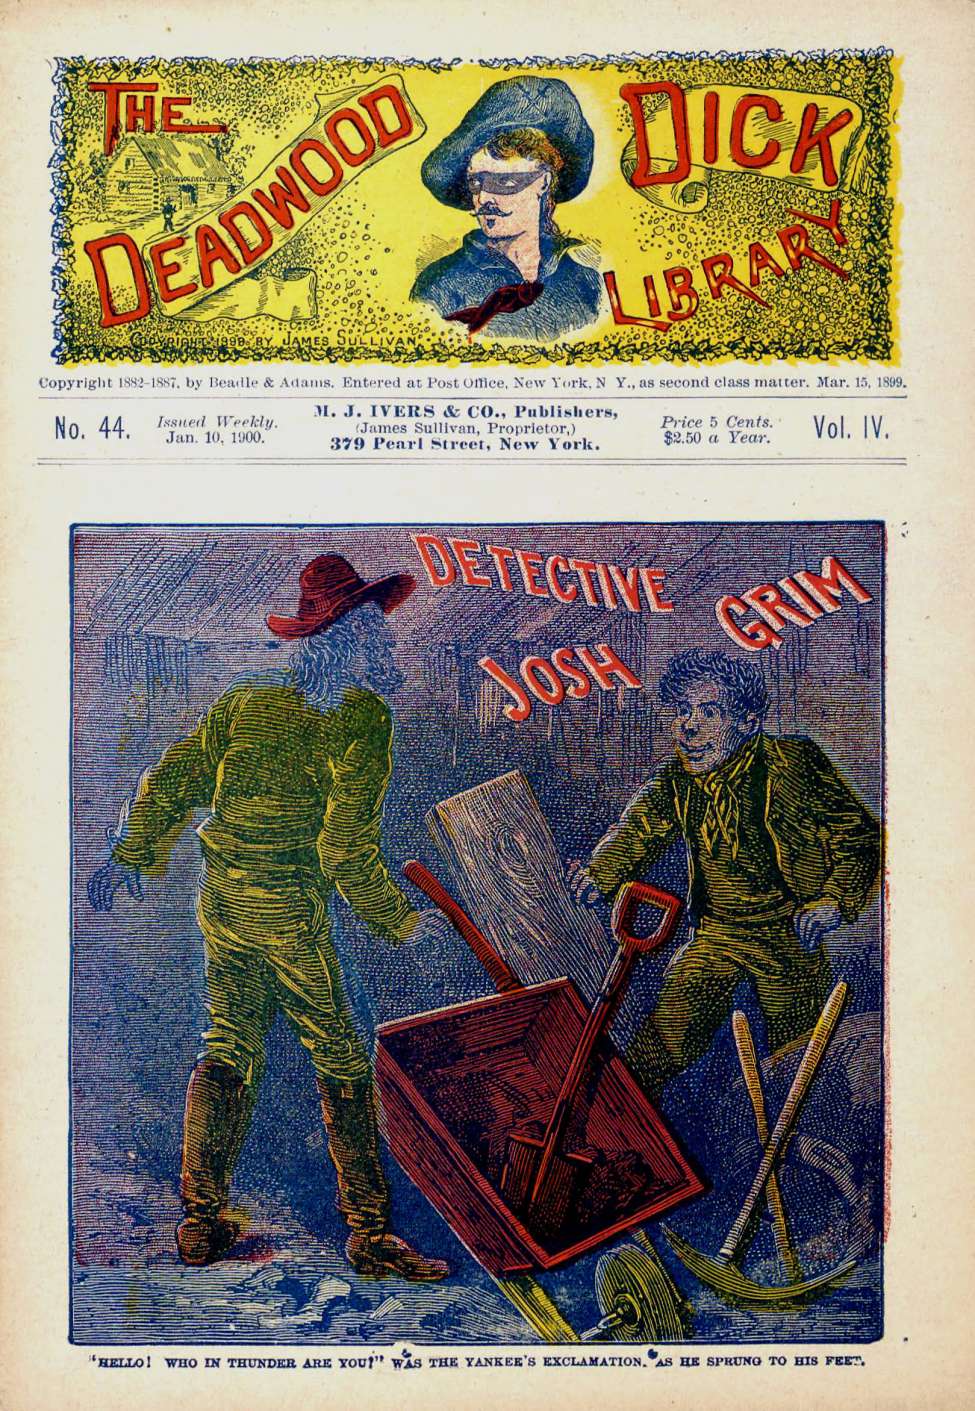 Comic Book Cover For Deadwood Dick Library v4 44 - Detective Josh Grim